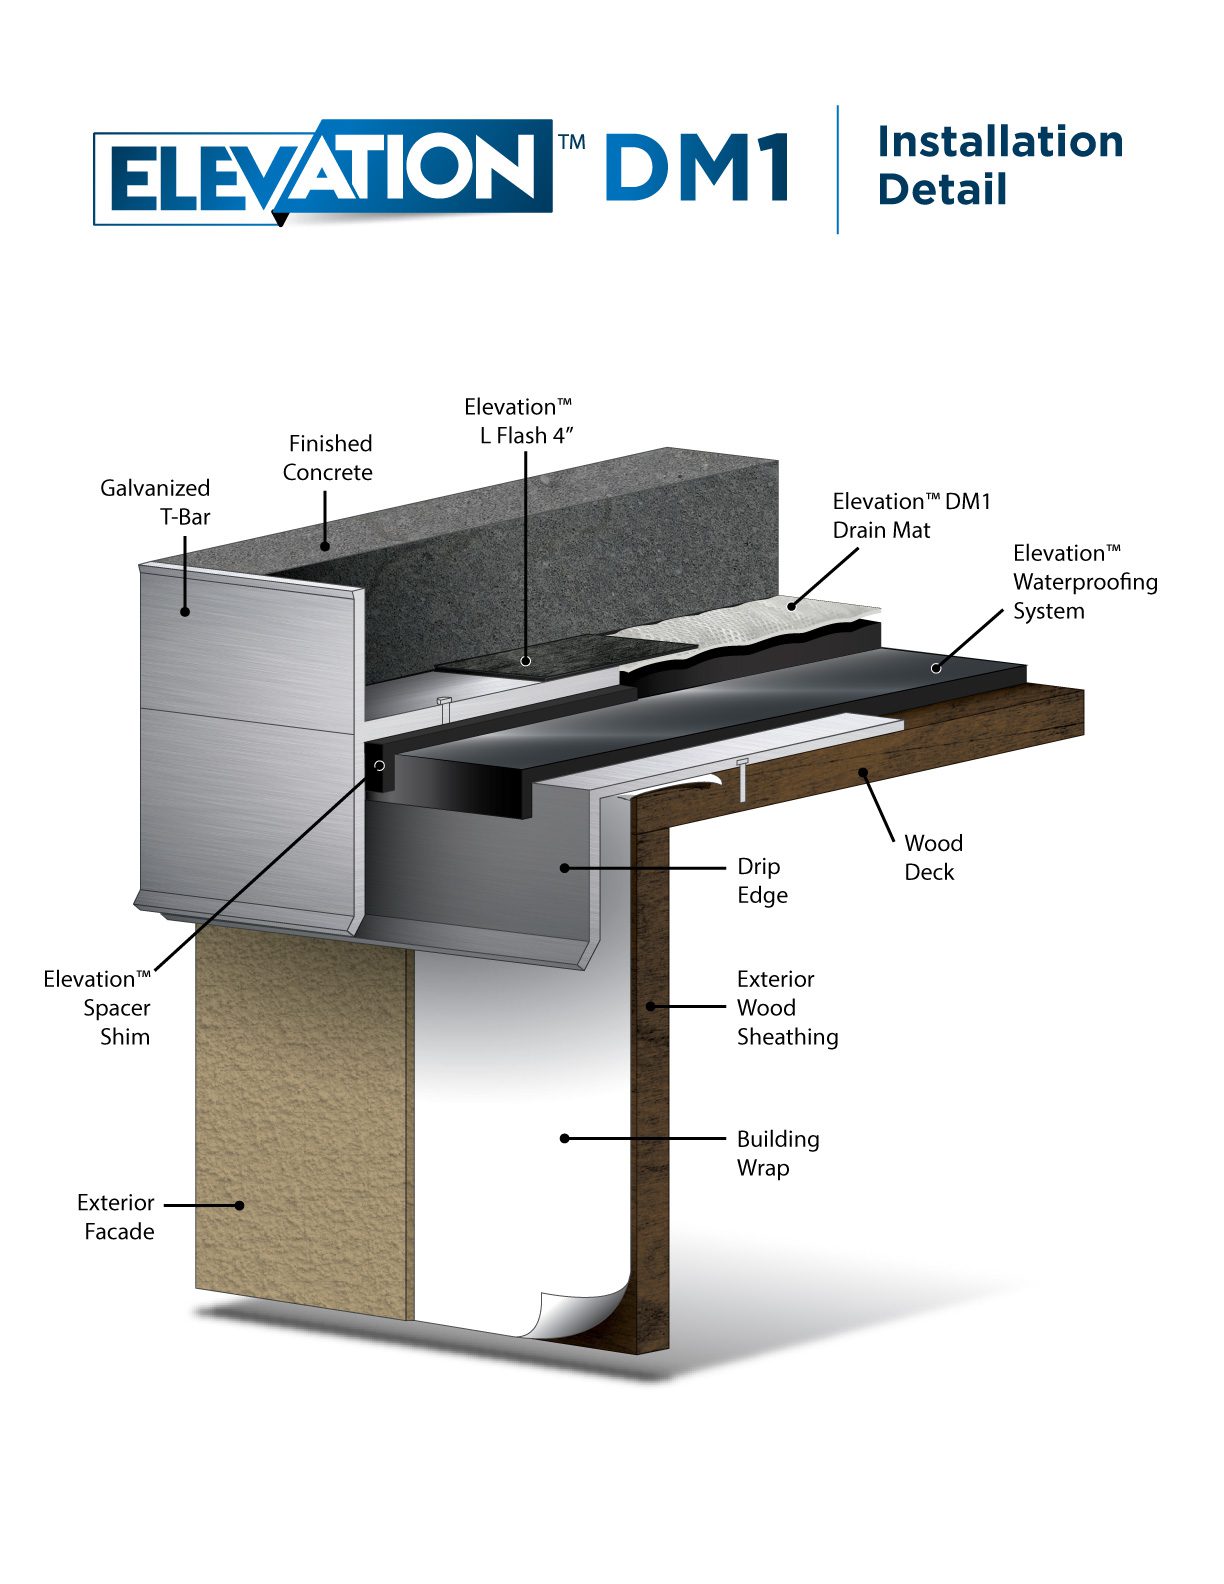 Elevation DM1 Drainage Mat Installation Detail Illustration